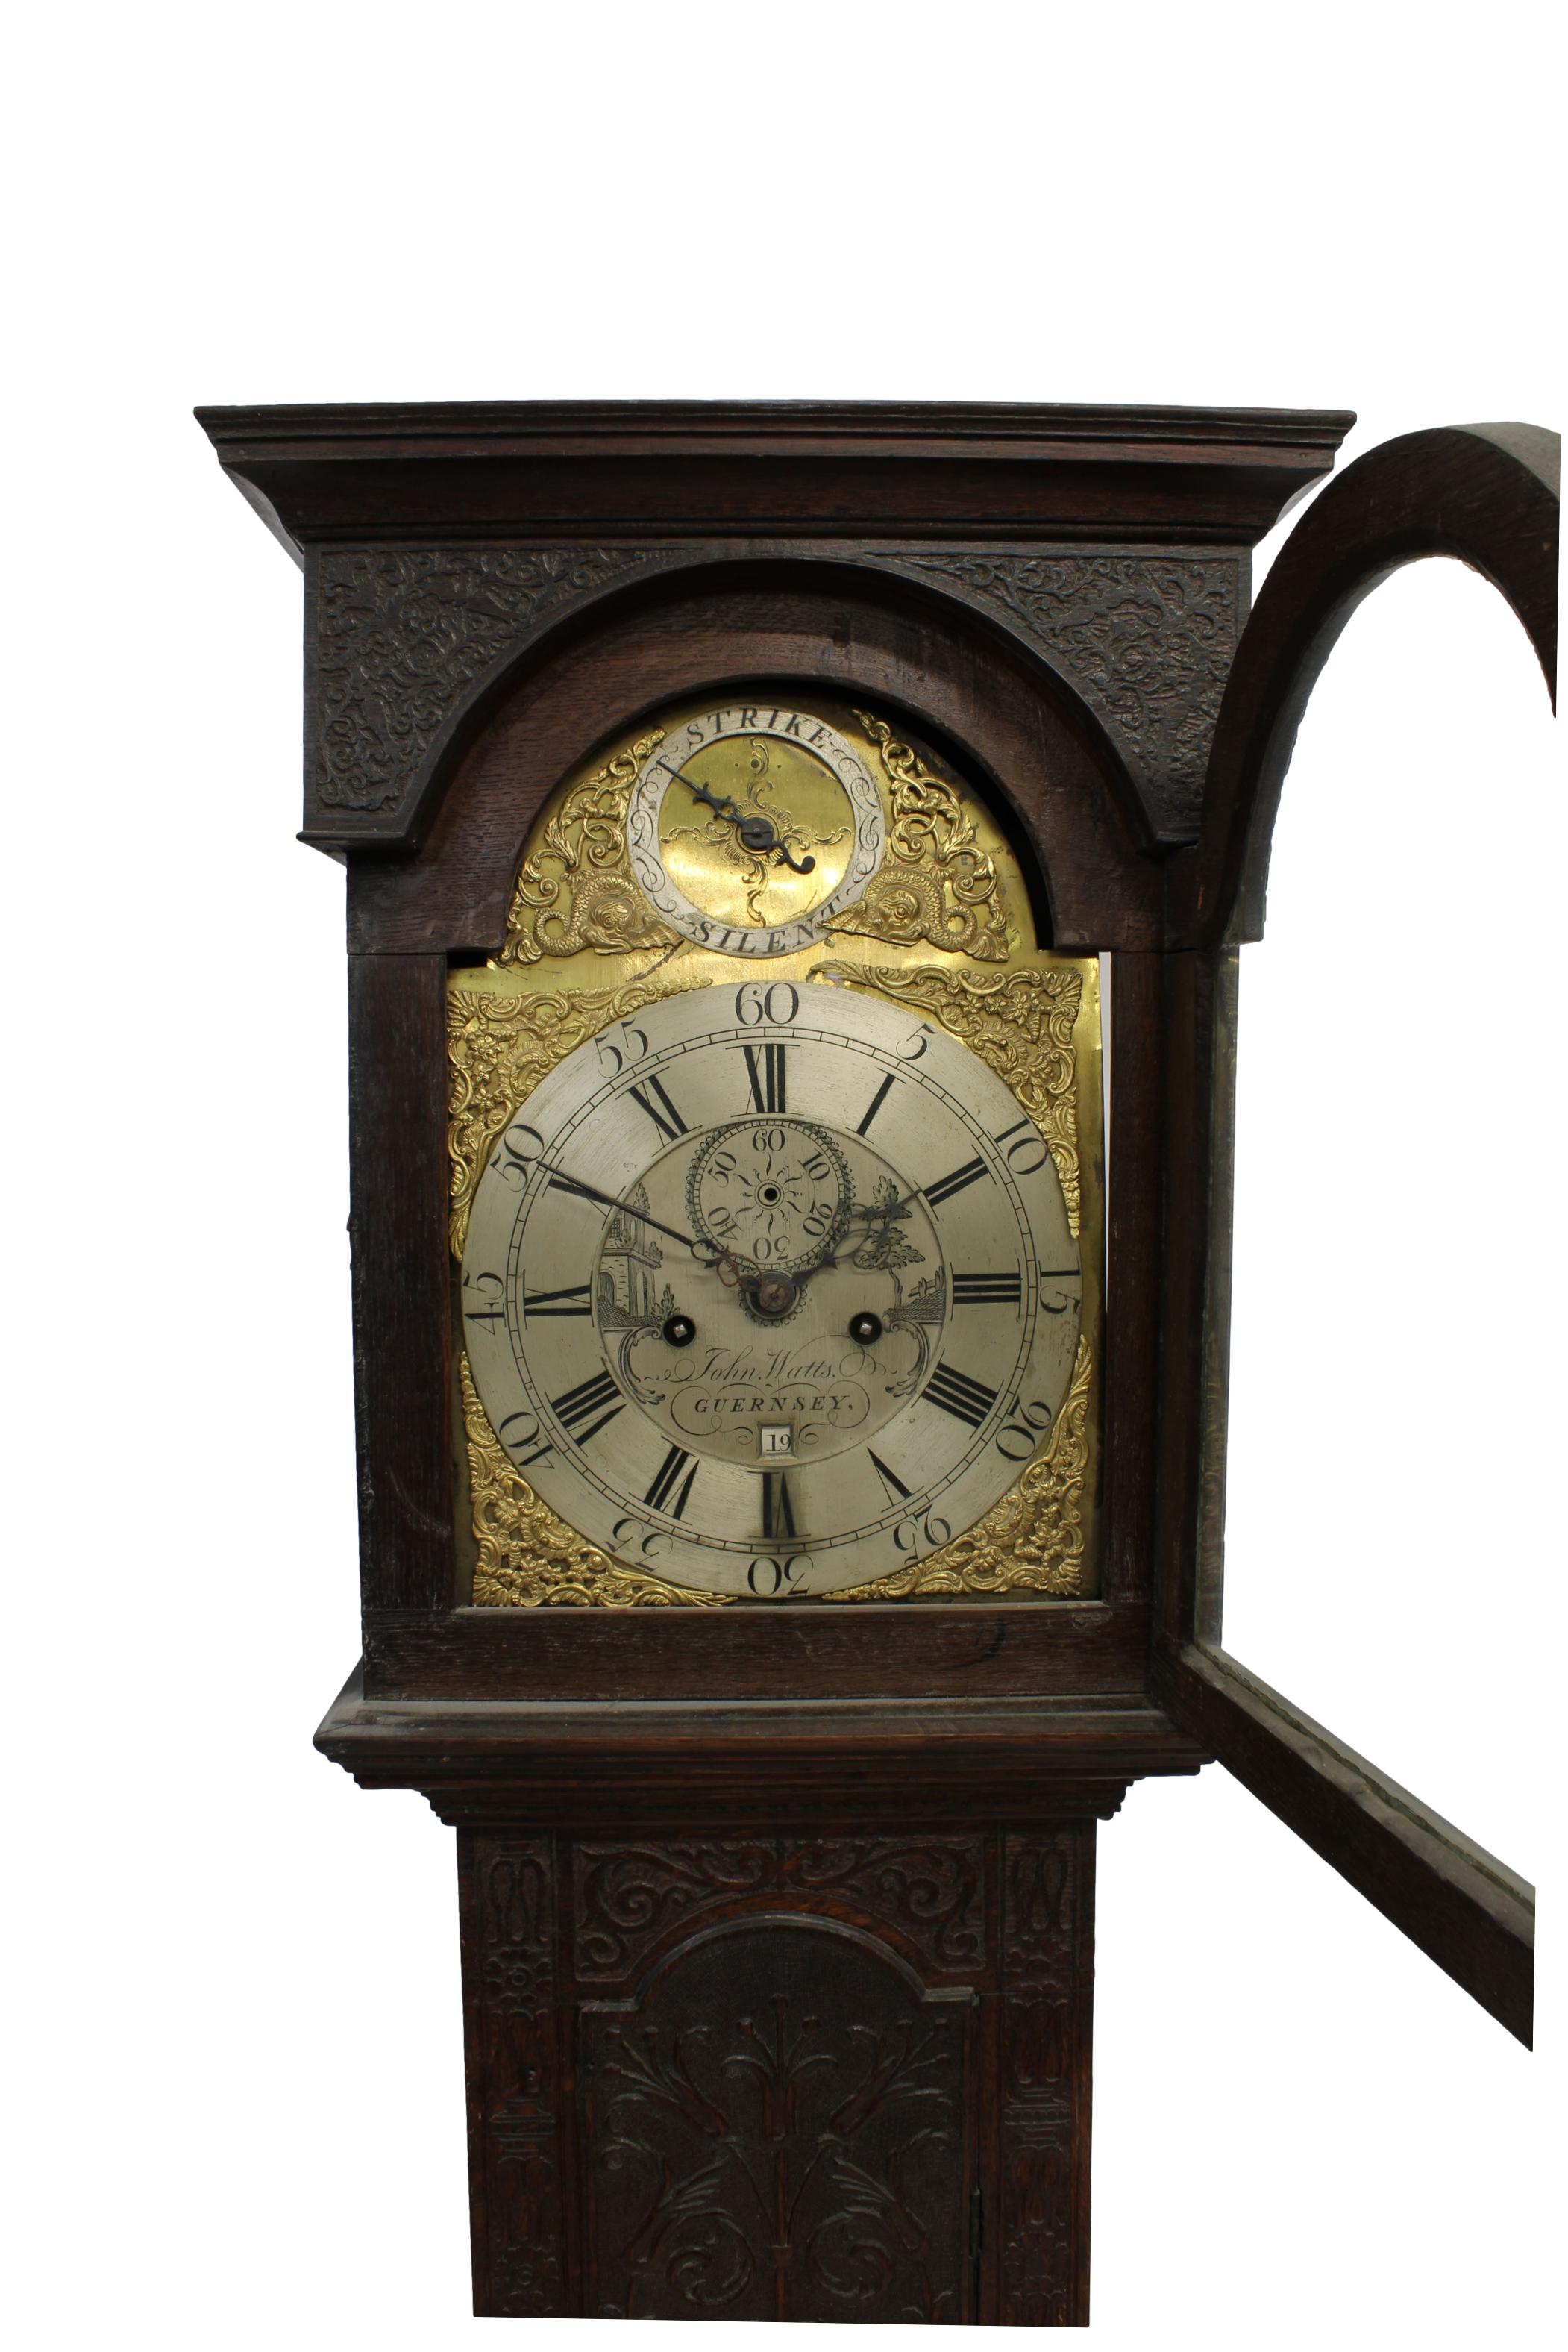 An 18th century Channel Island longcase clock - Image 2 of 2